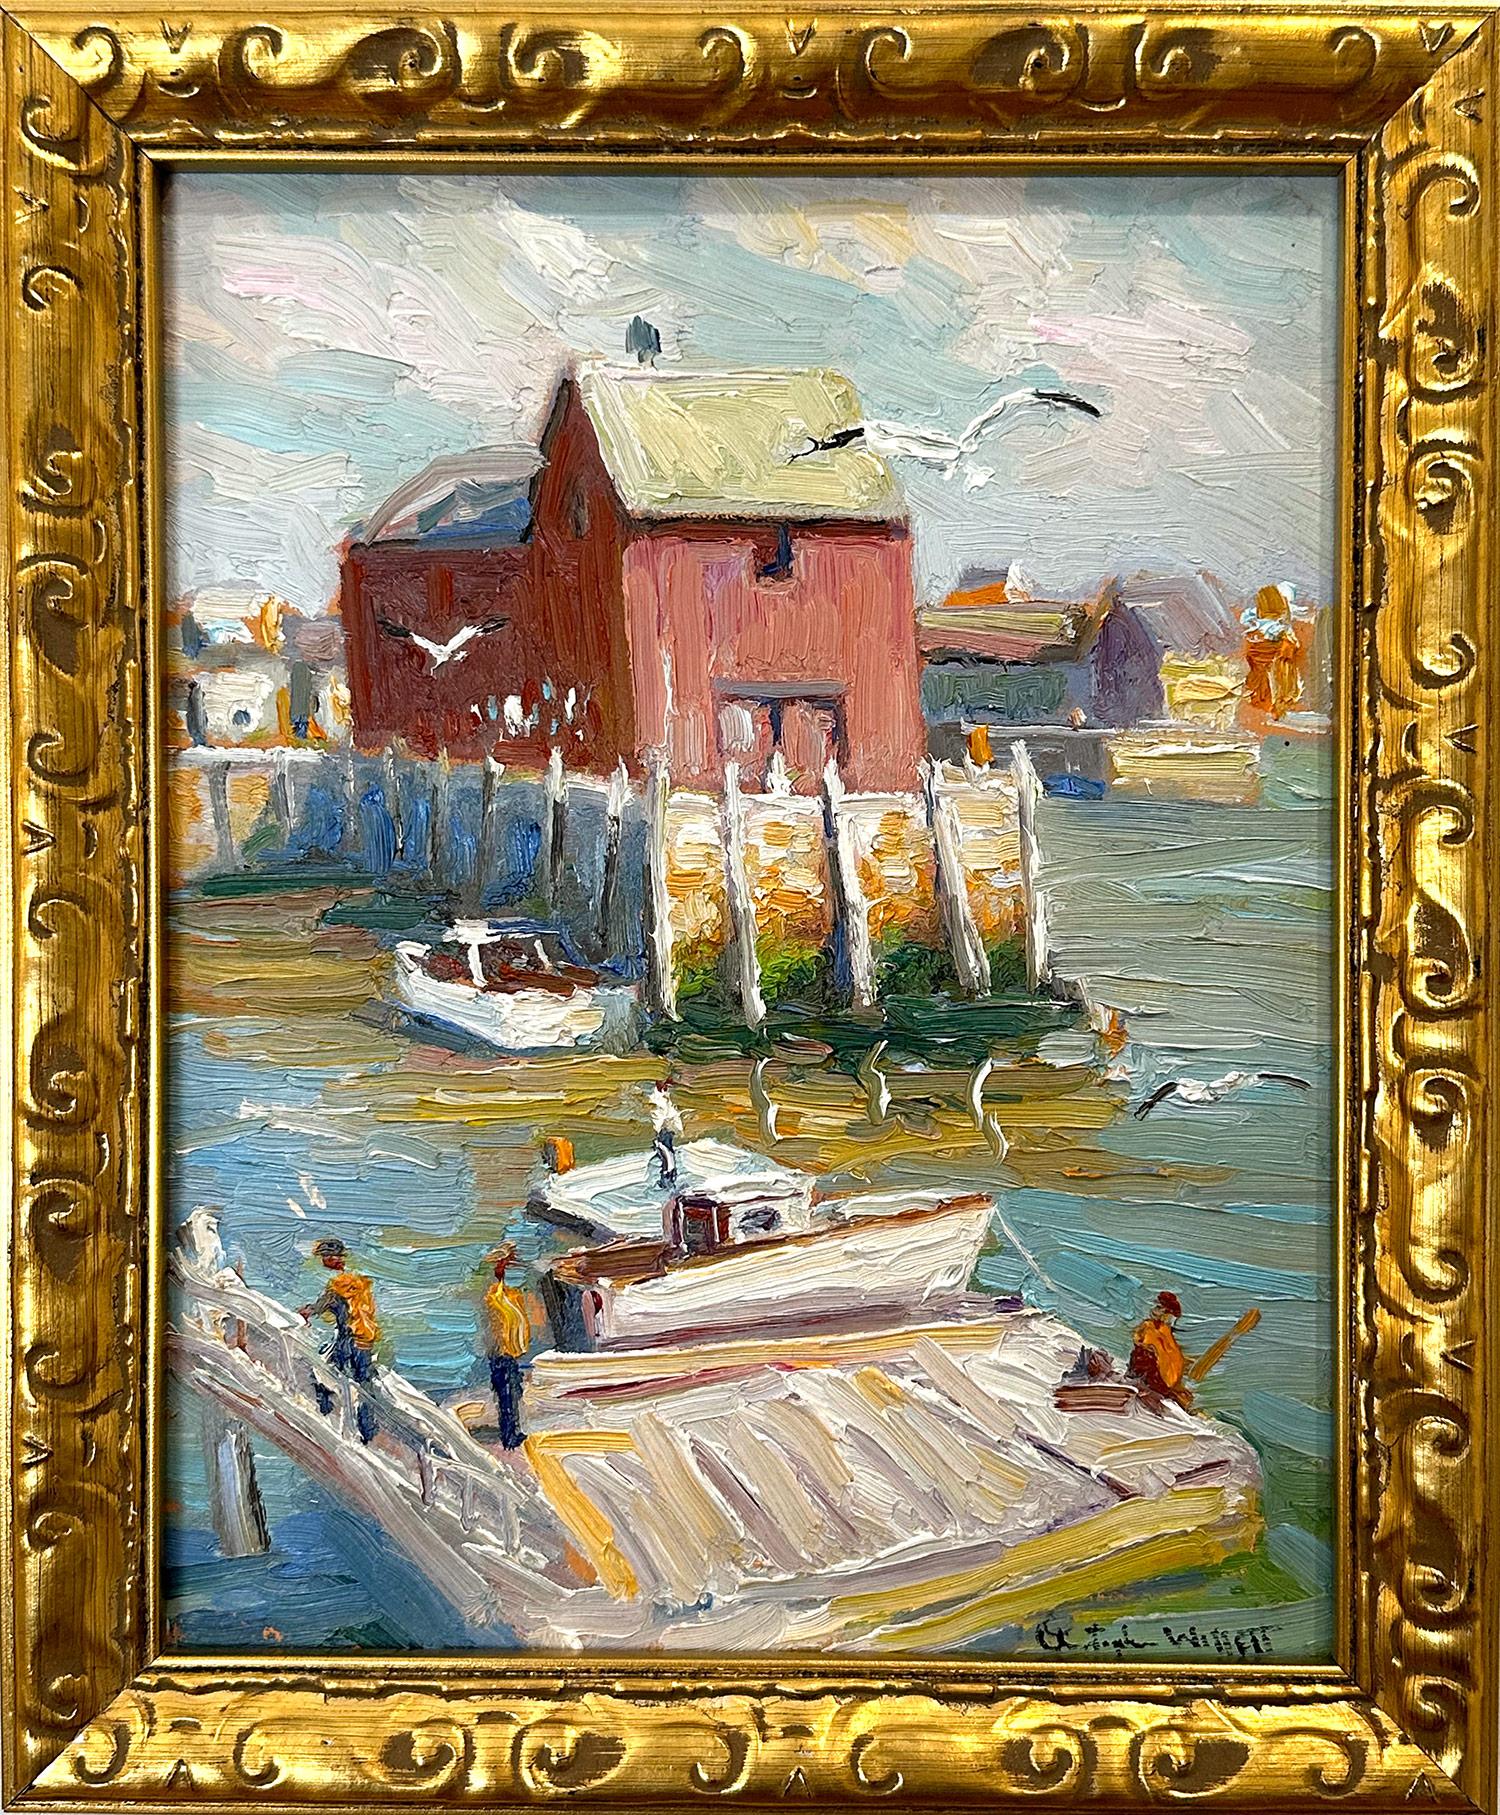 Christopher Willett Figurative Painting - "Motif #1" Rockport Massachusetts Fishermen by the Seaport Docks Oil Painting